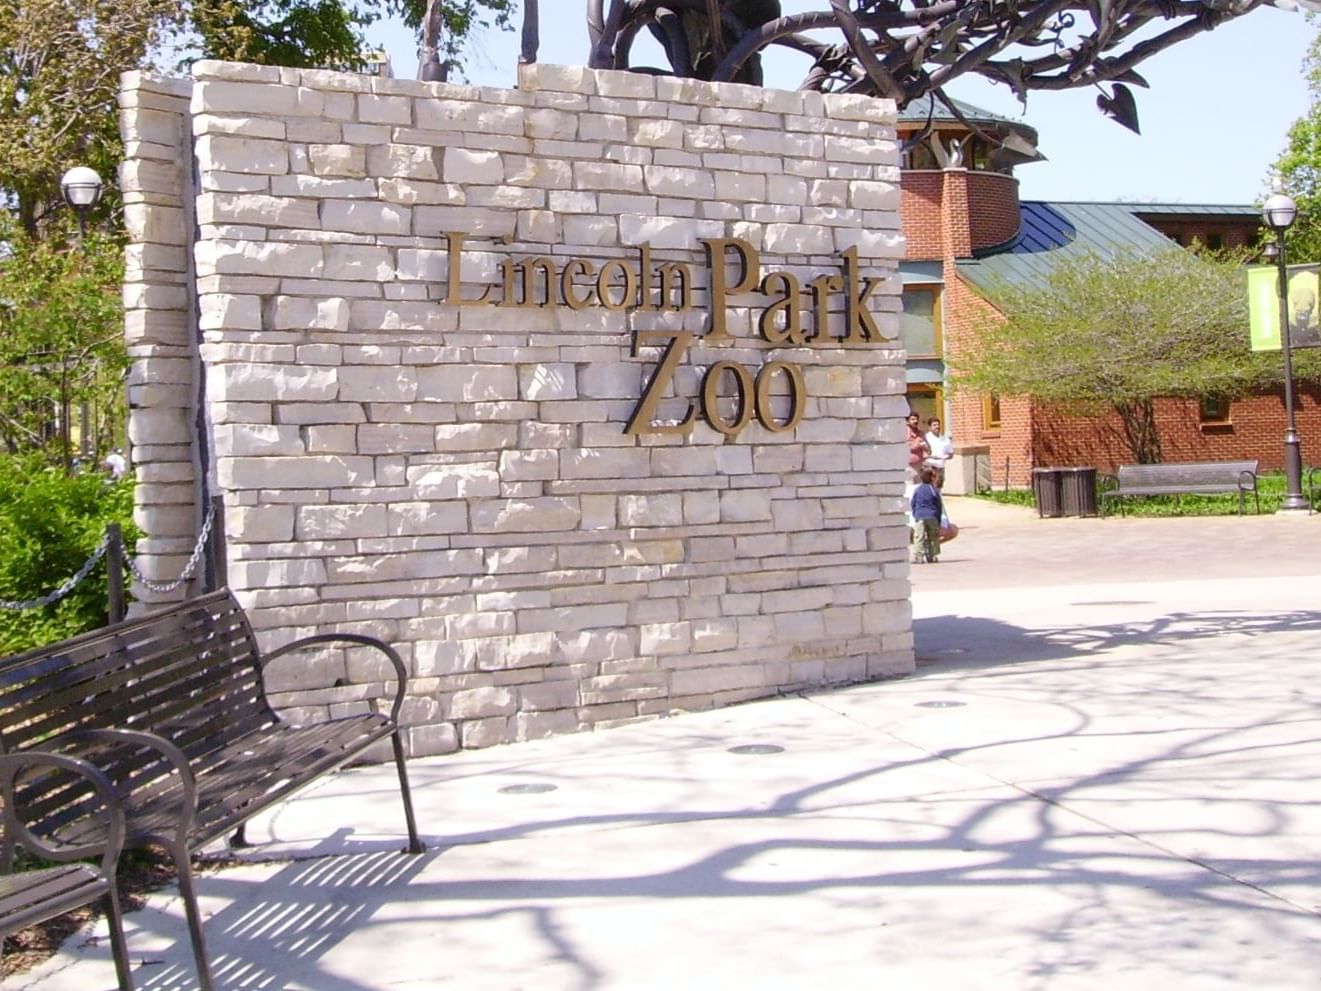 The entrance of the Lincoln Park Zoo near Hotel Saint Clair